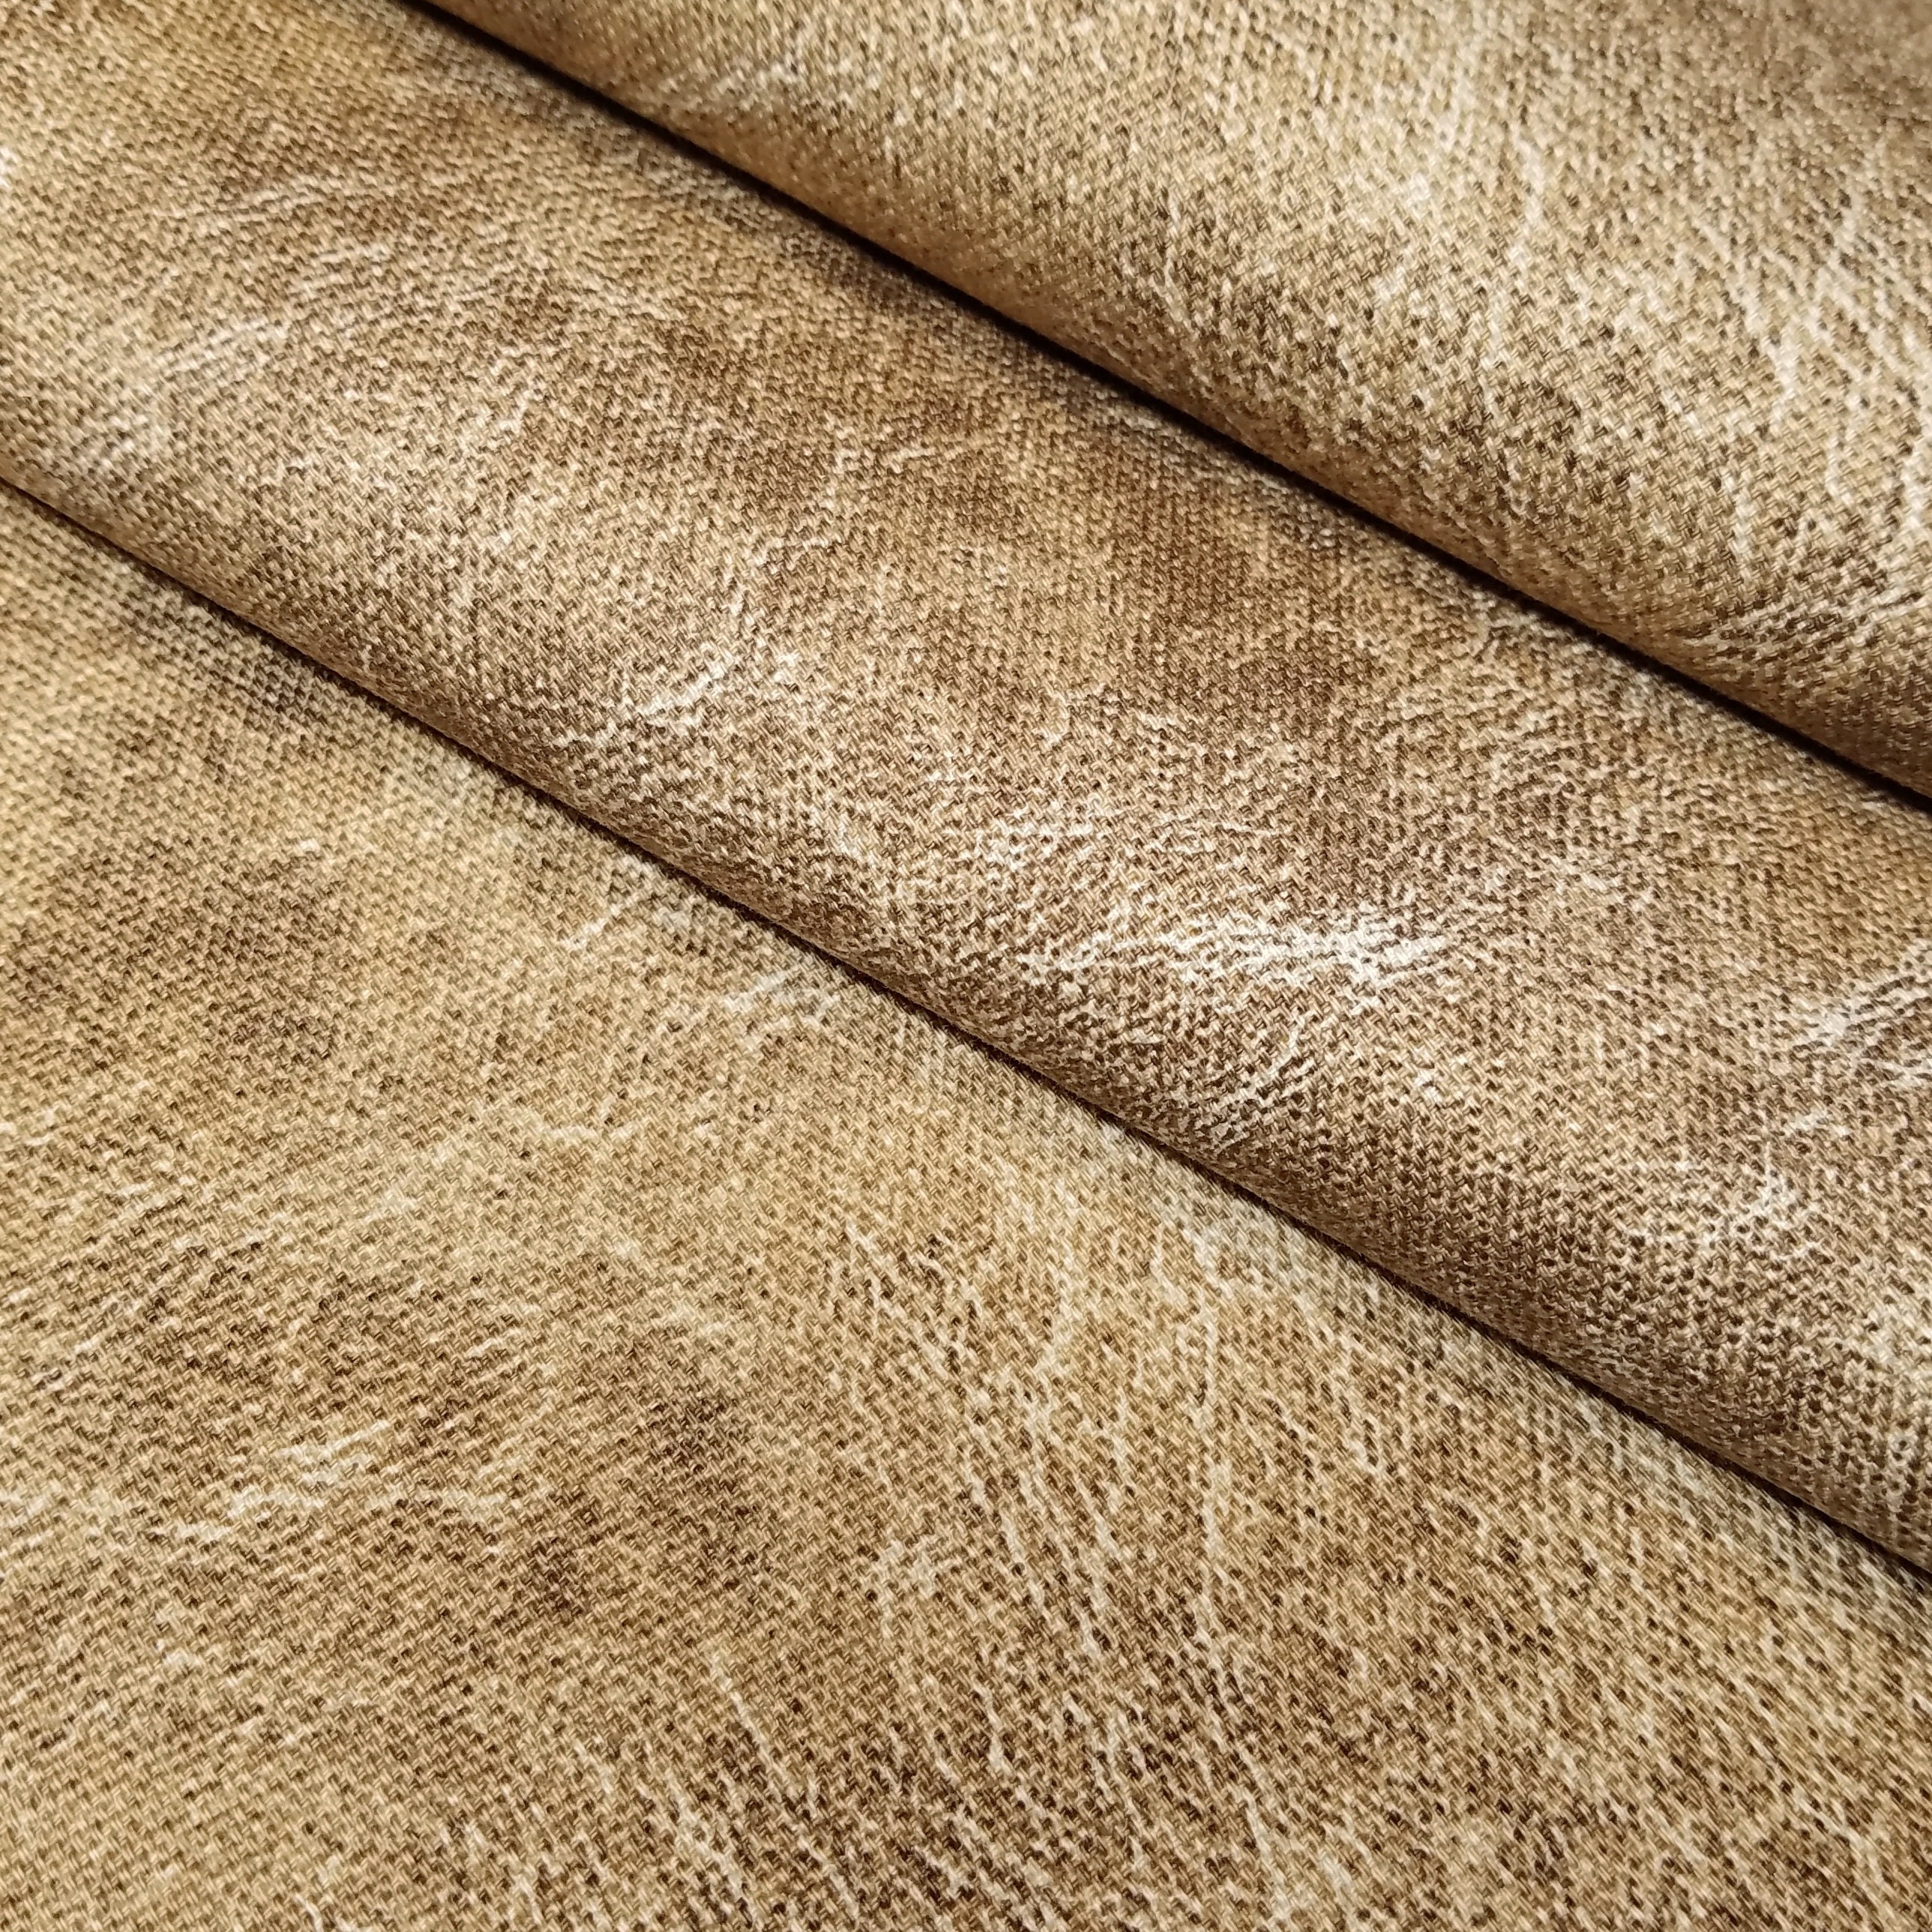 Lecien Japan M Standard collection- light beige faux leather cotton canvas  oxford fabric